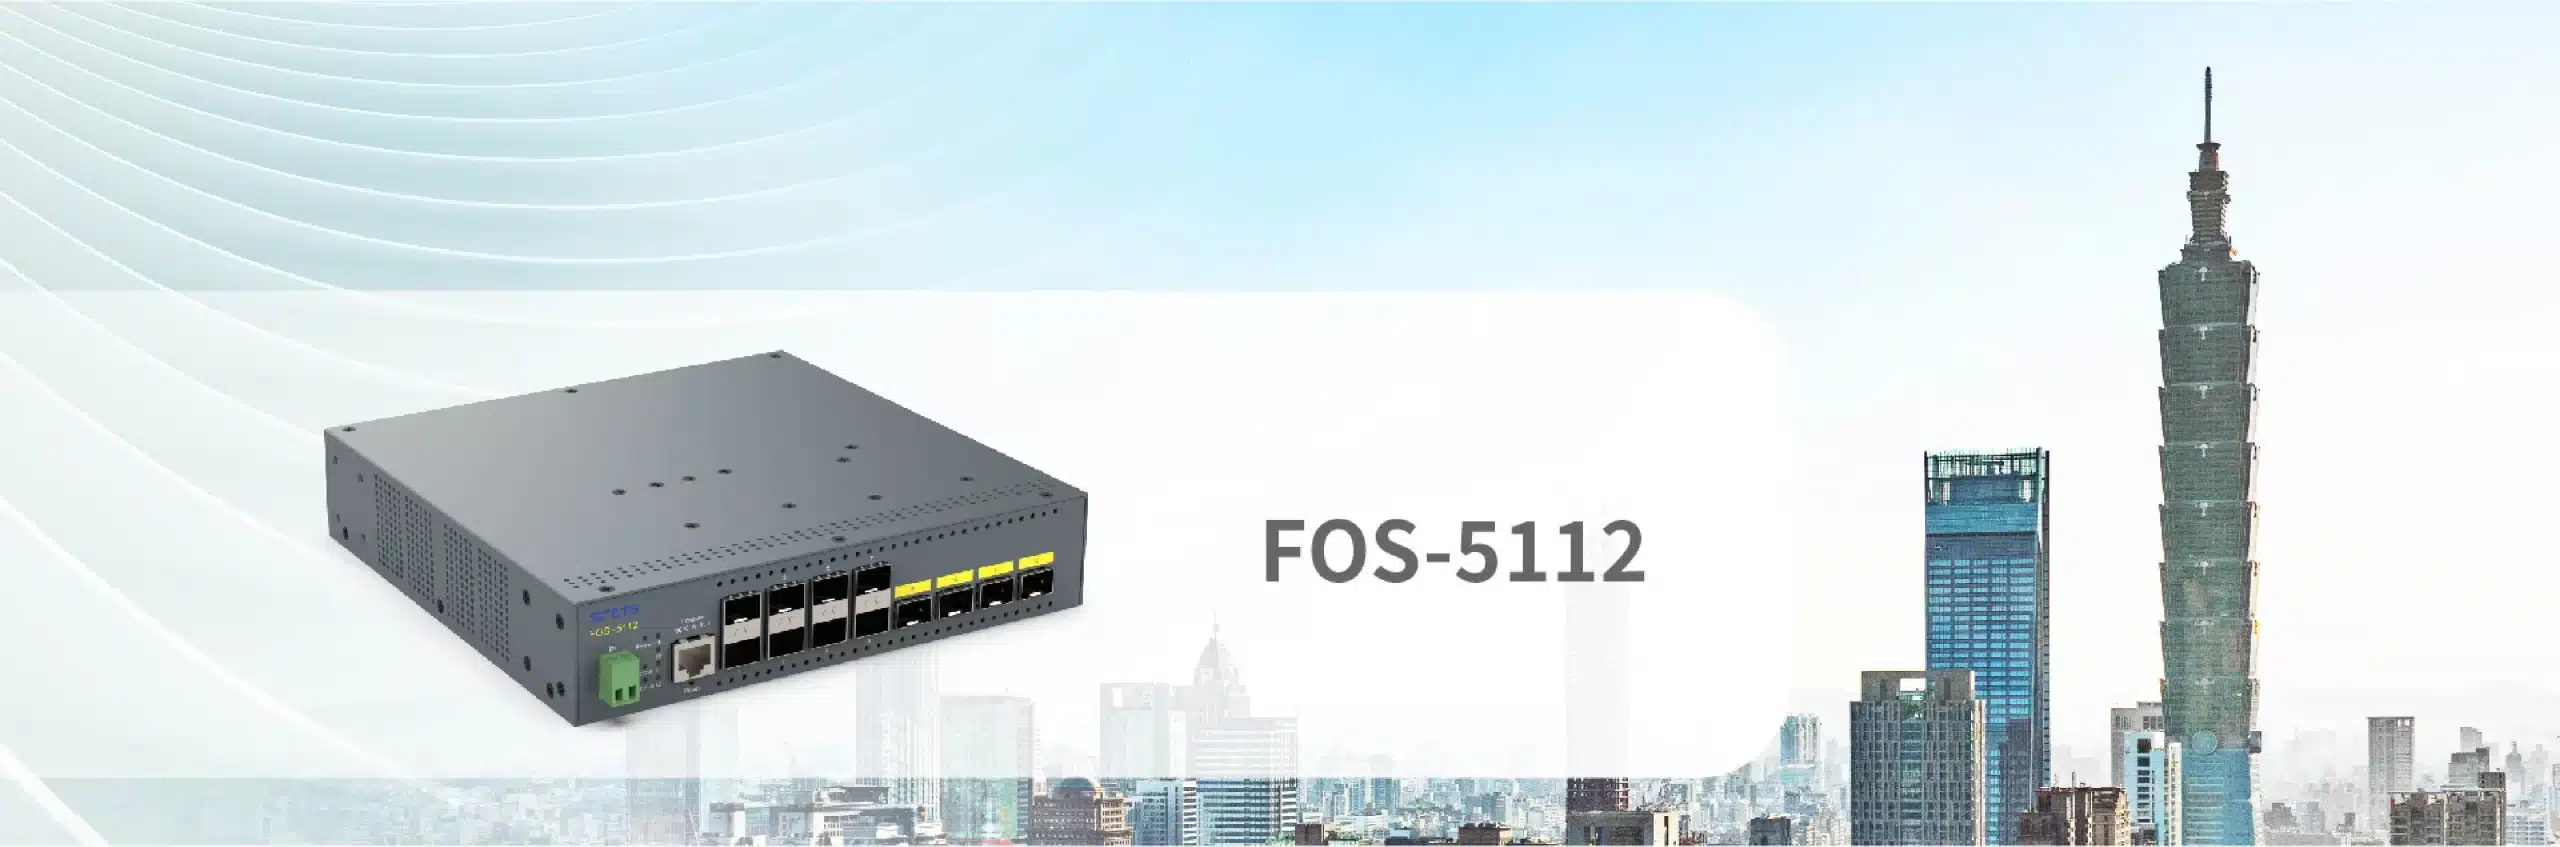 FOS-5112 - Compact 10G fiber optical switch